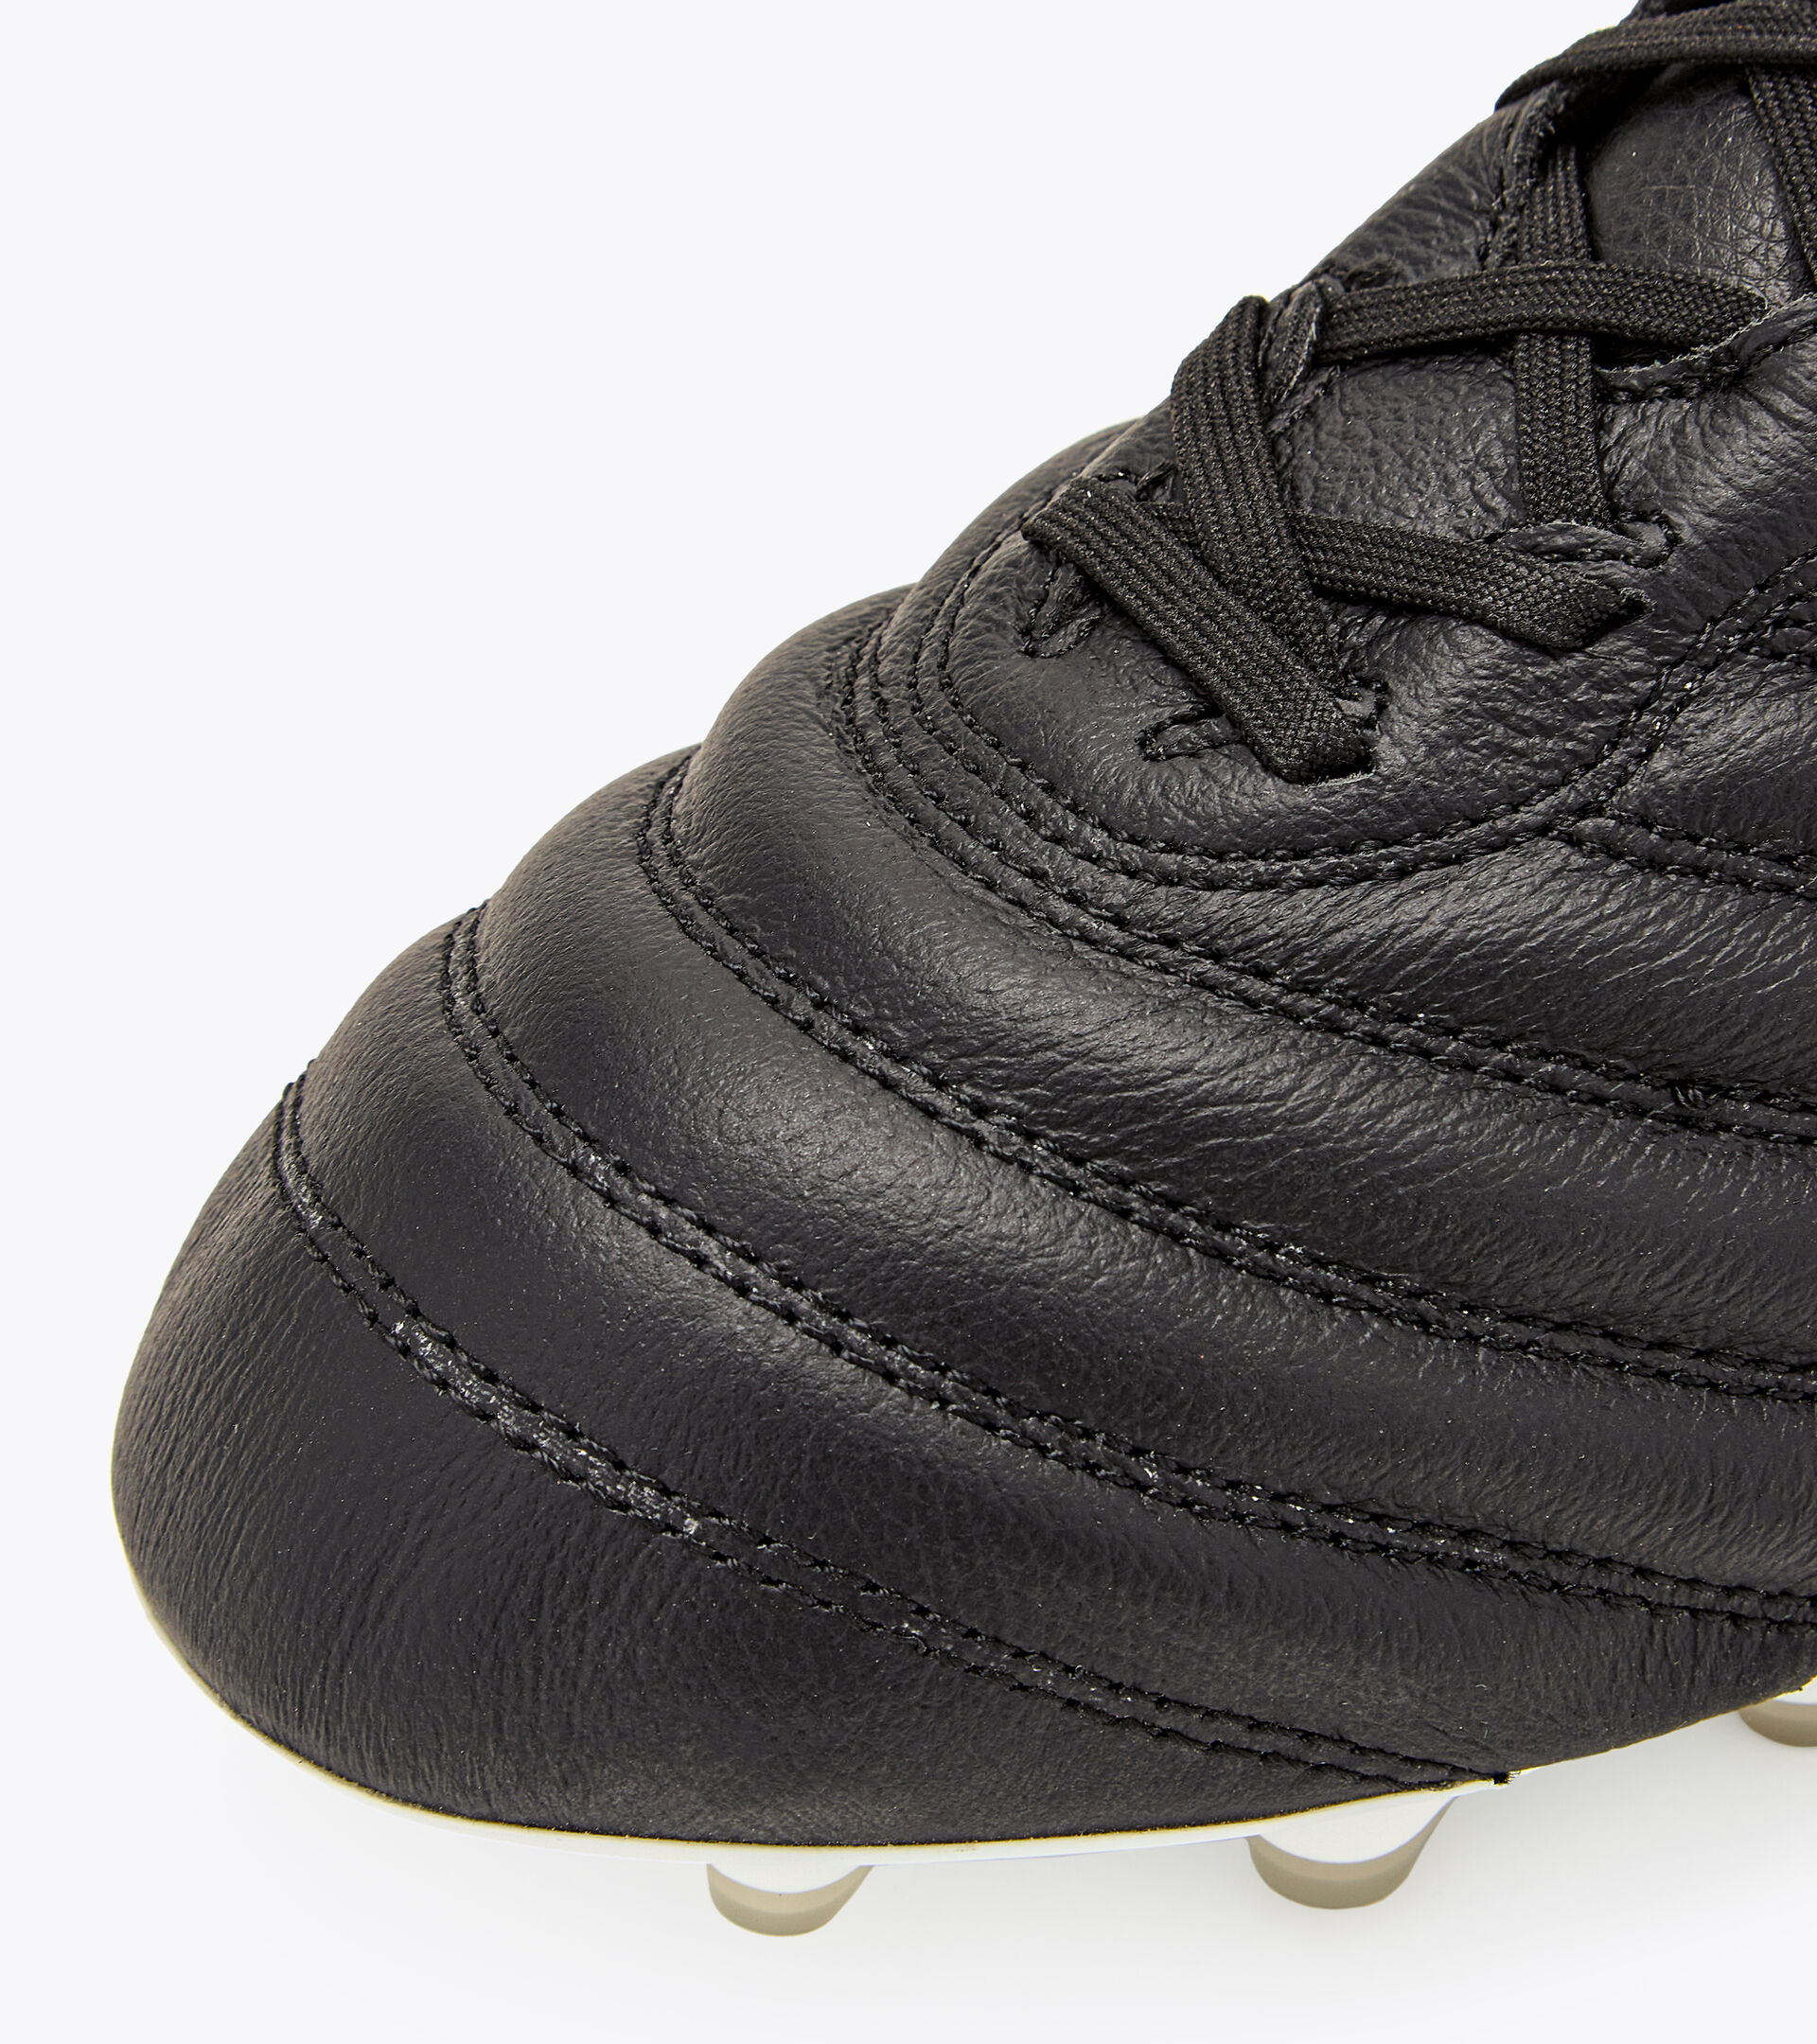 Firm ground and synthetic pitches football boots - Men’s BRASIL ELITE2 TECH ITA LPX BLACK /WHITE - Diadora